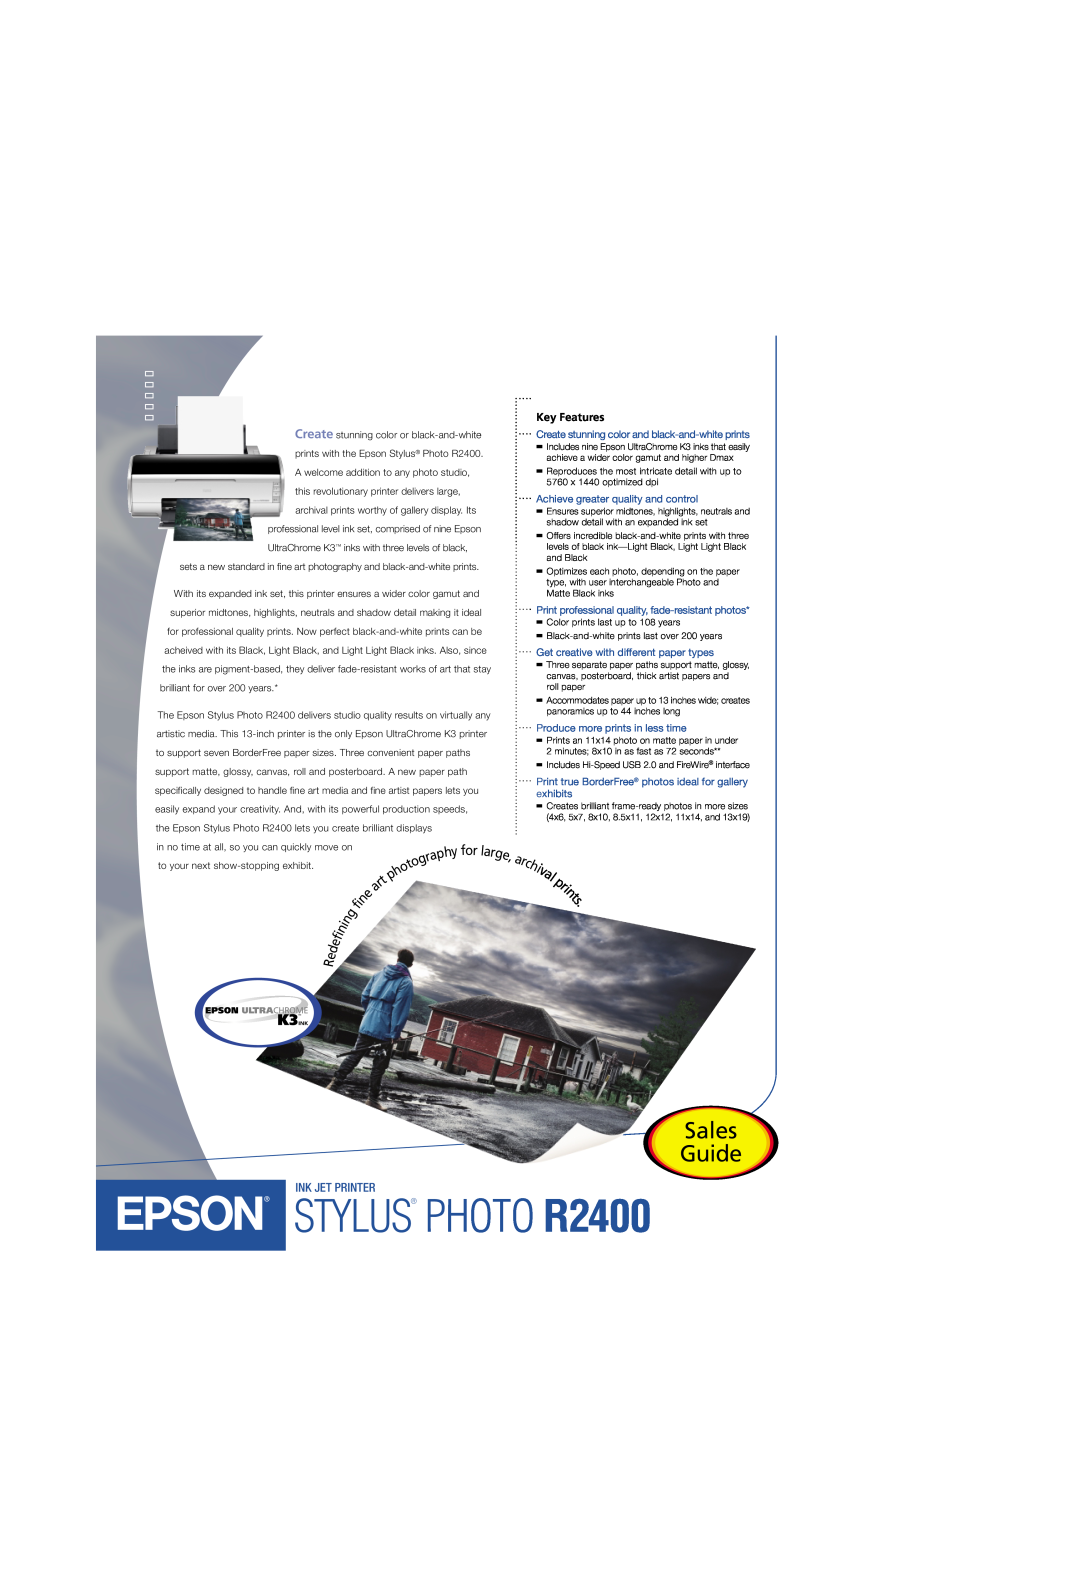 Epson manual 1、General Guide, 2、Printer testing, CIS for Epson Stylus Photo R2400 